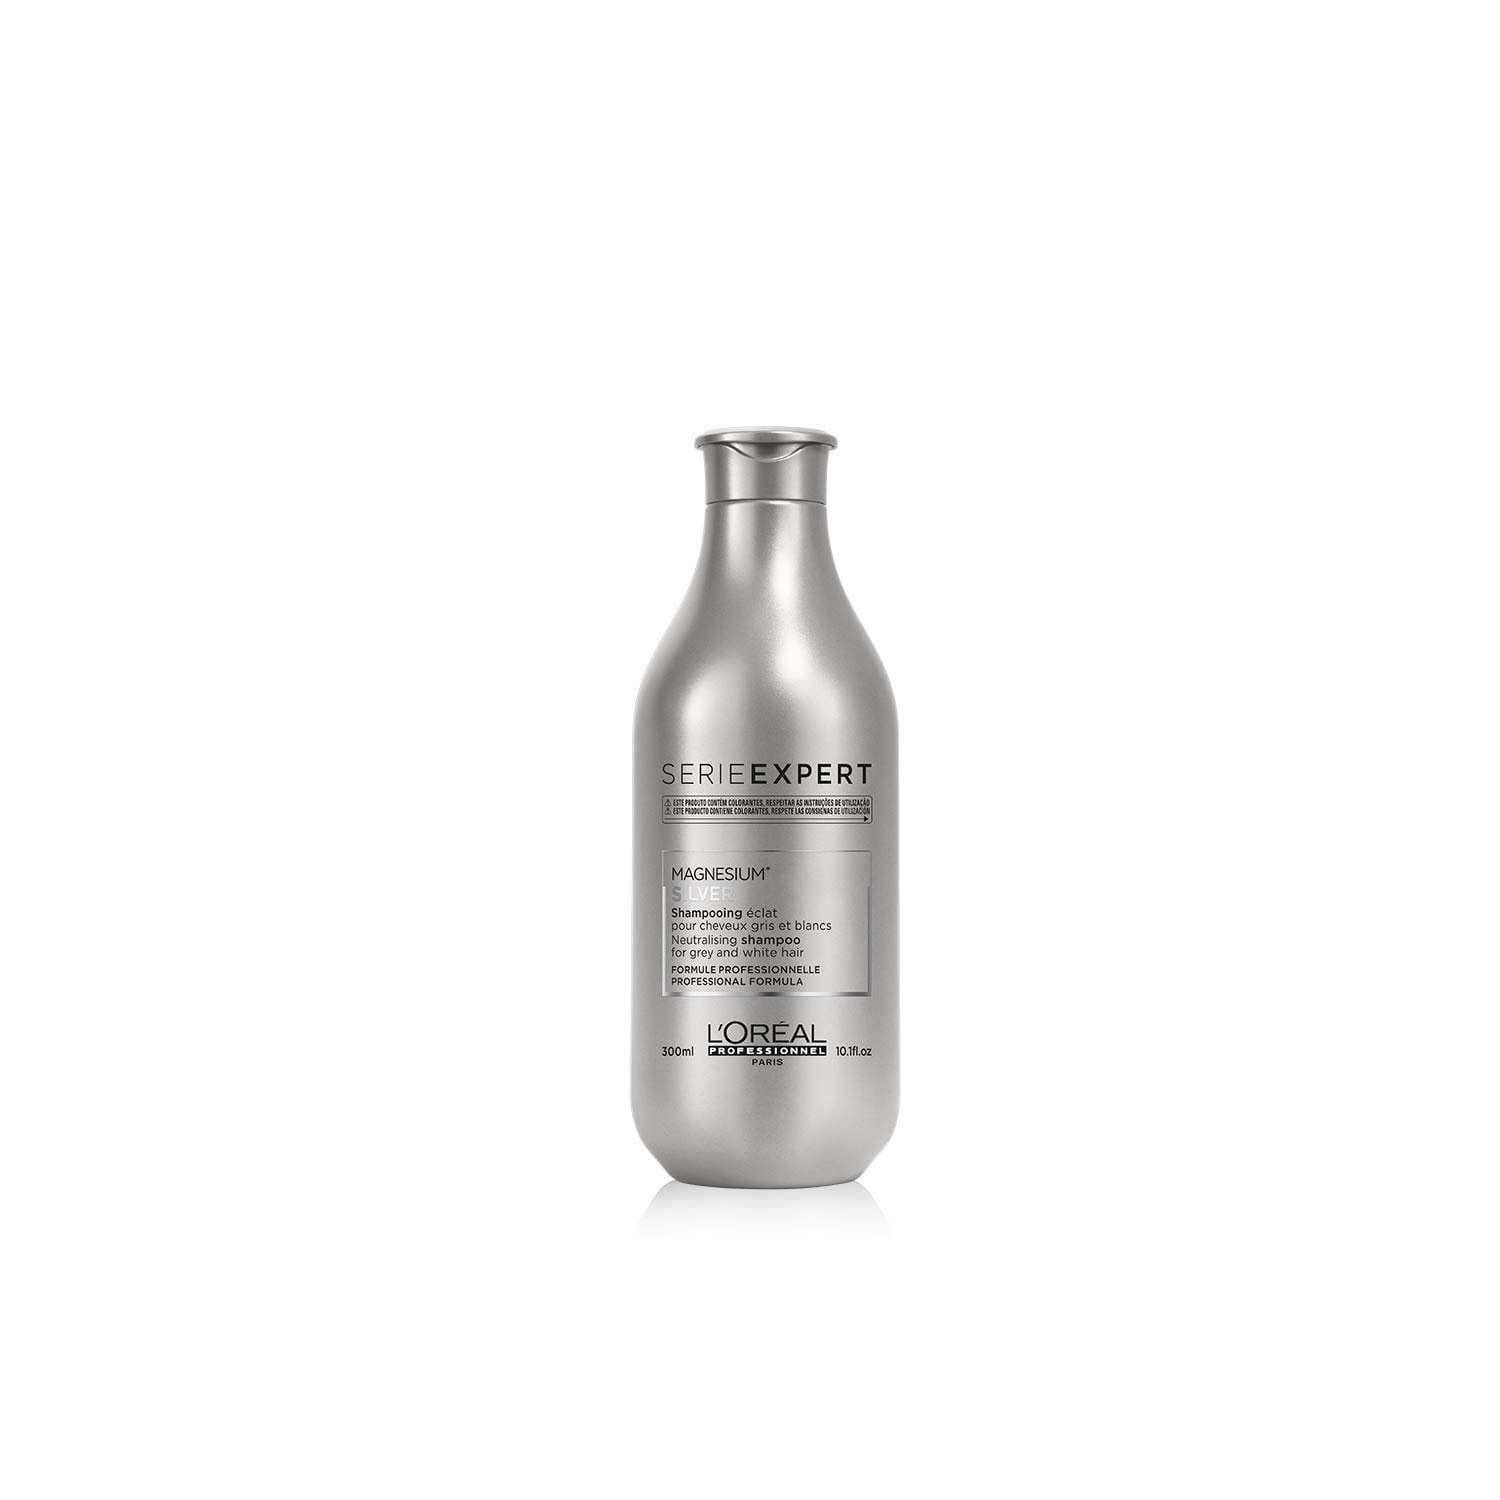 L'Oreal Professional AD1183 Serie Expert Silver Shampoo for Unisex, Ounce - Walmart.com